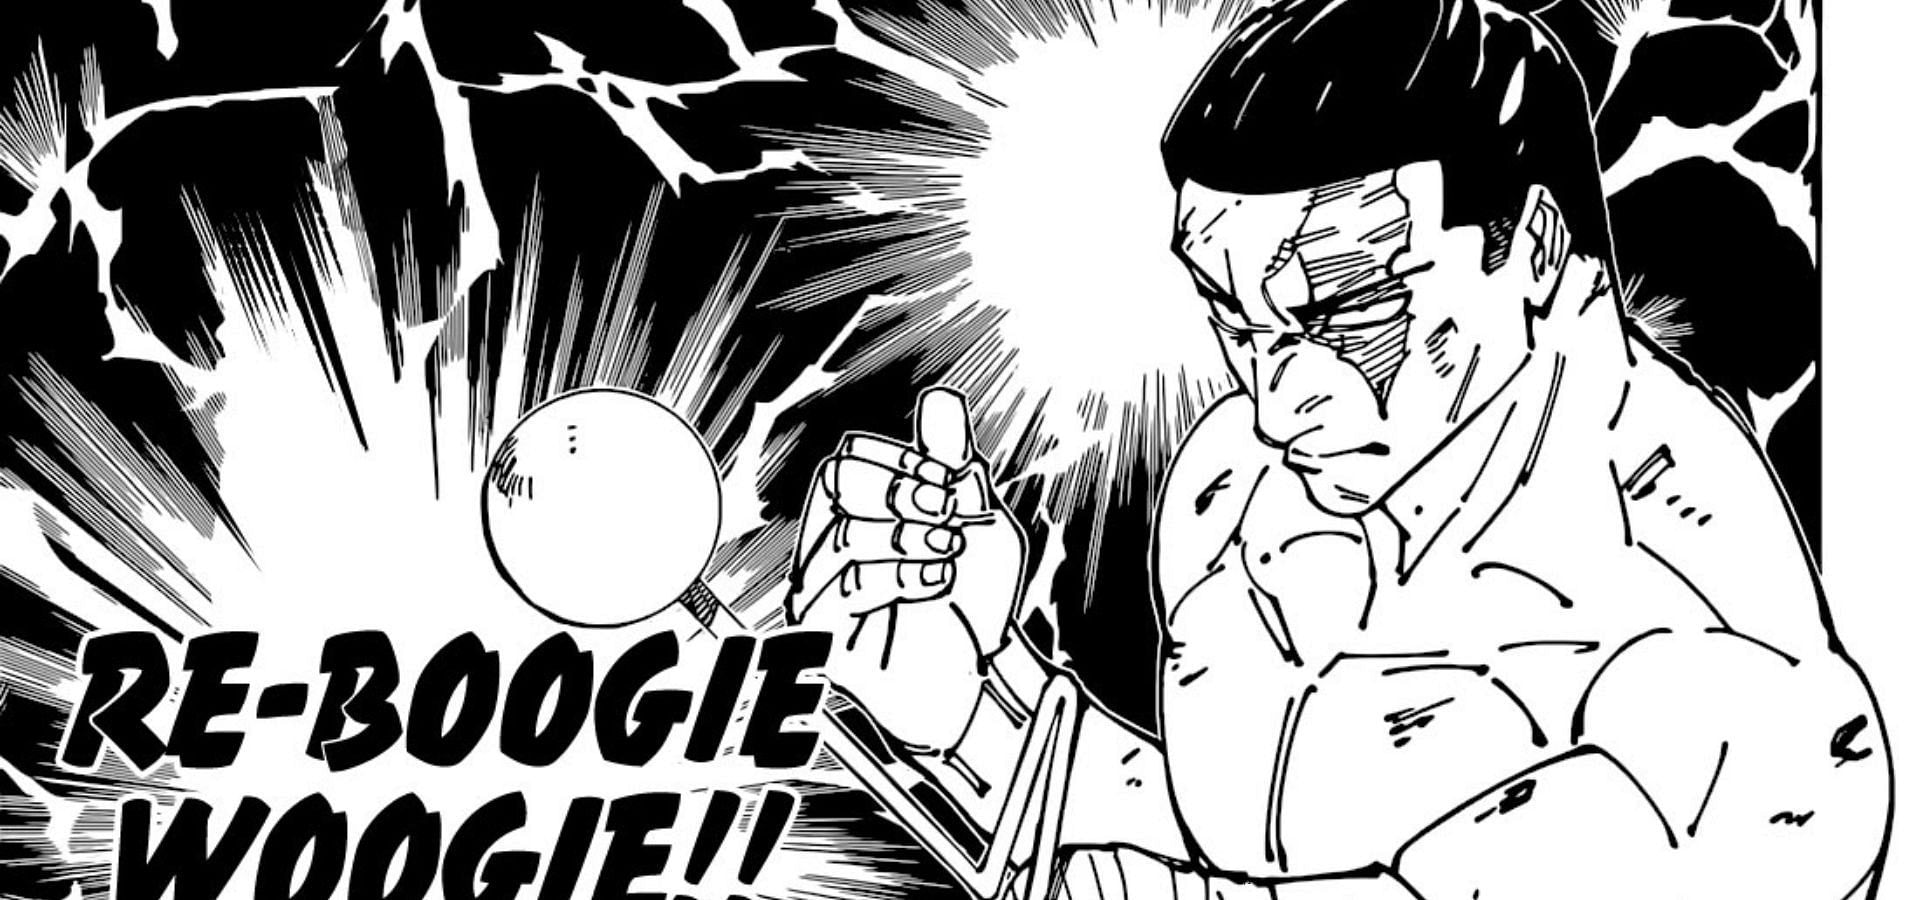 Aoi Todo with his Re-Boogie Woogie technique (Image via Shueisha)